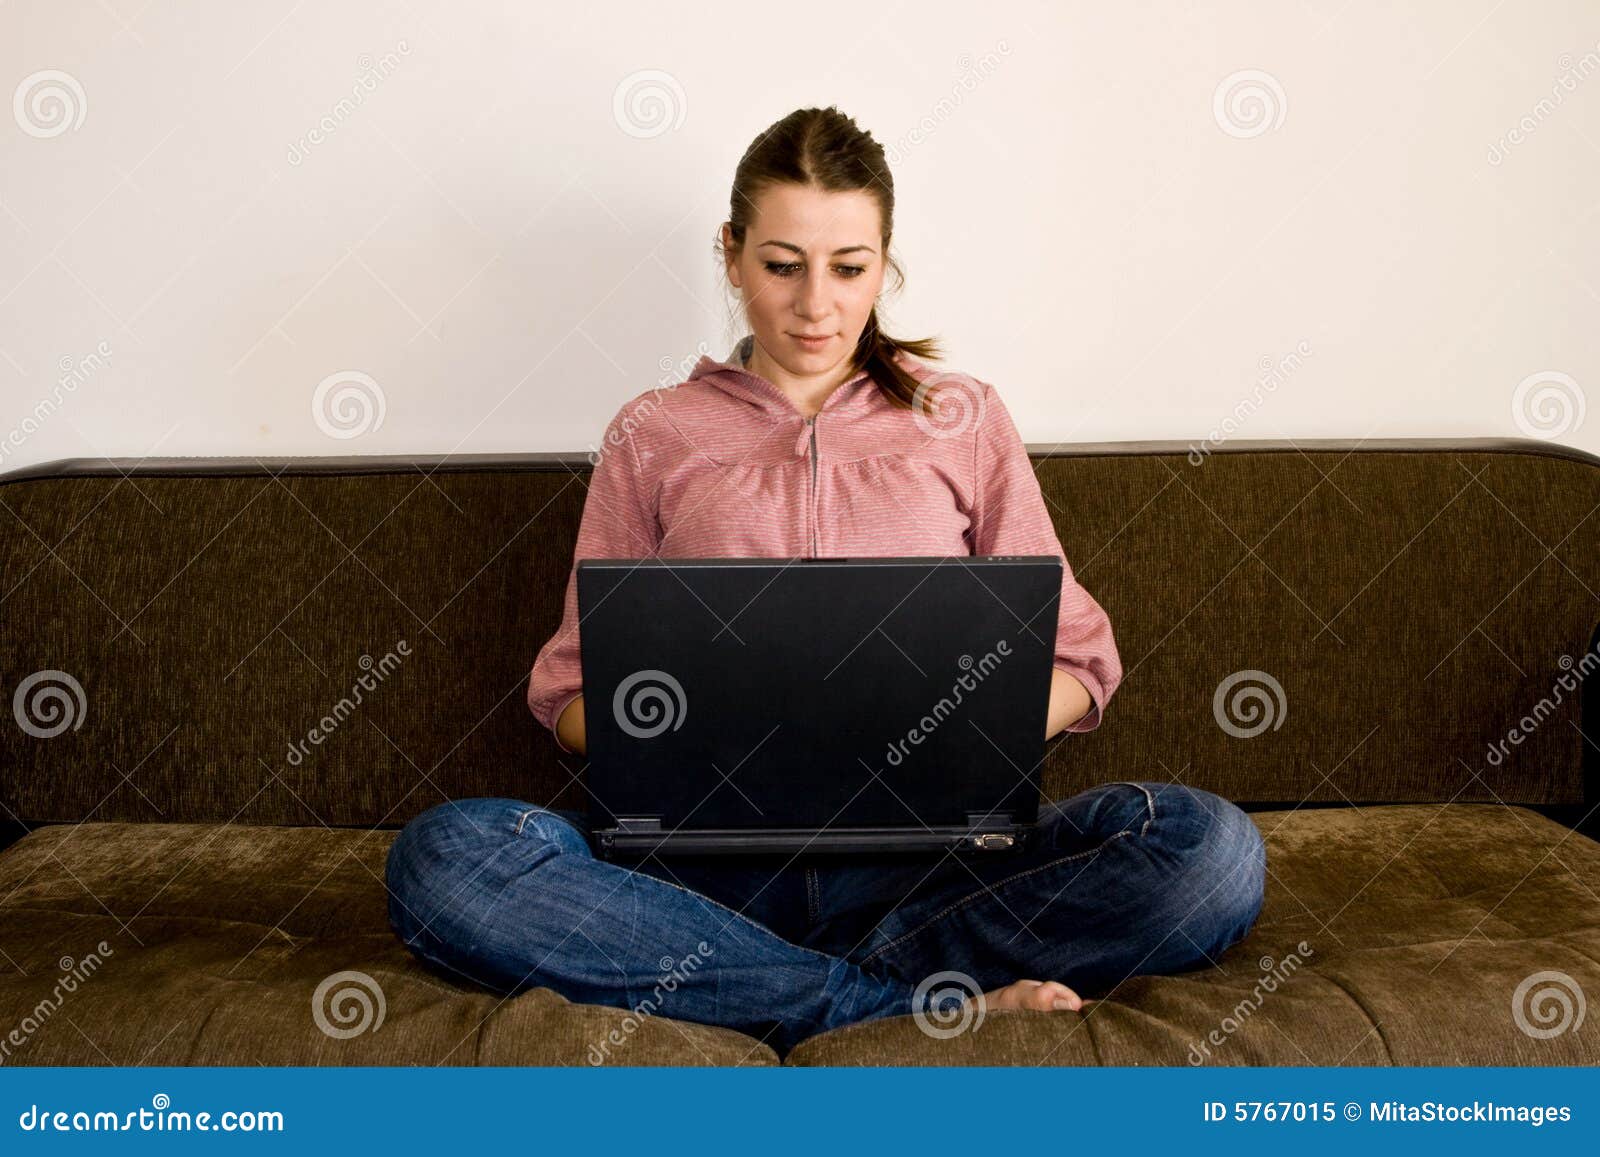 Student Using Laptop